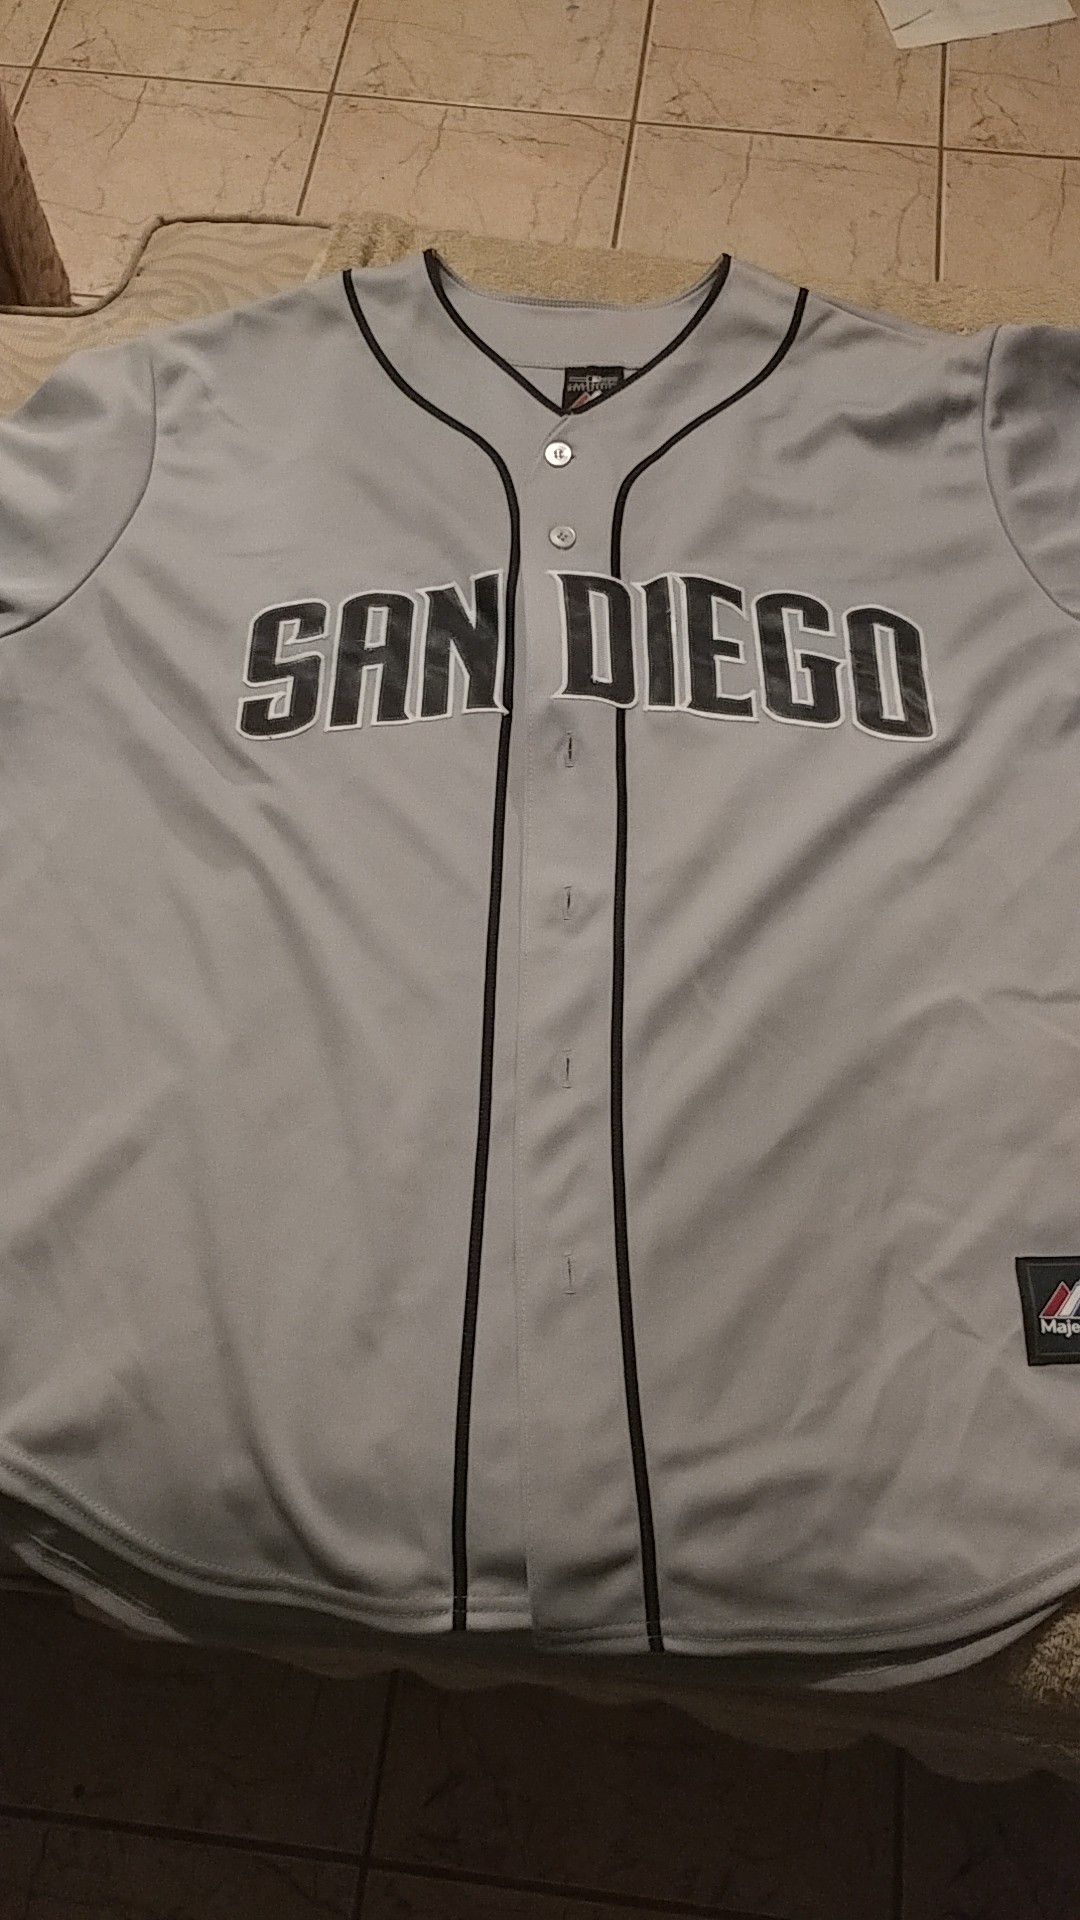 San Diego Padres Baseball jersey